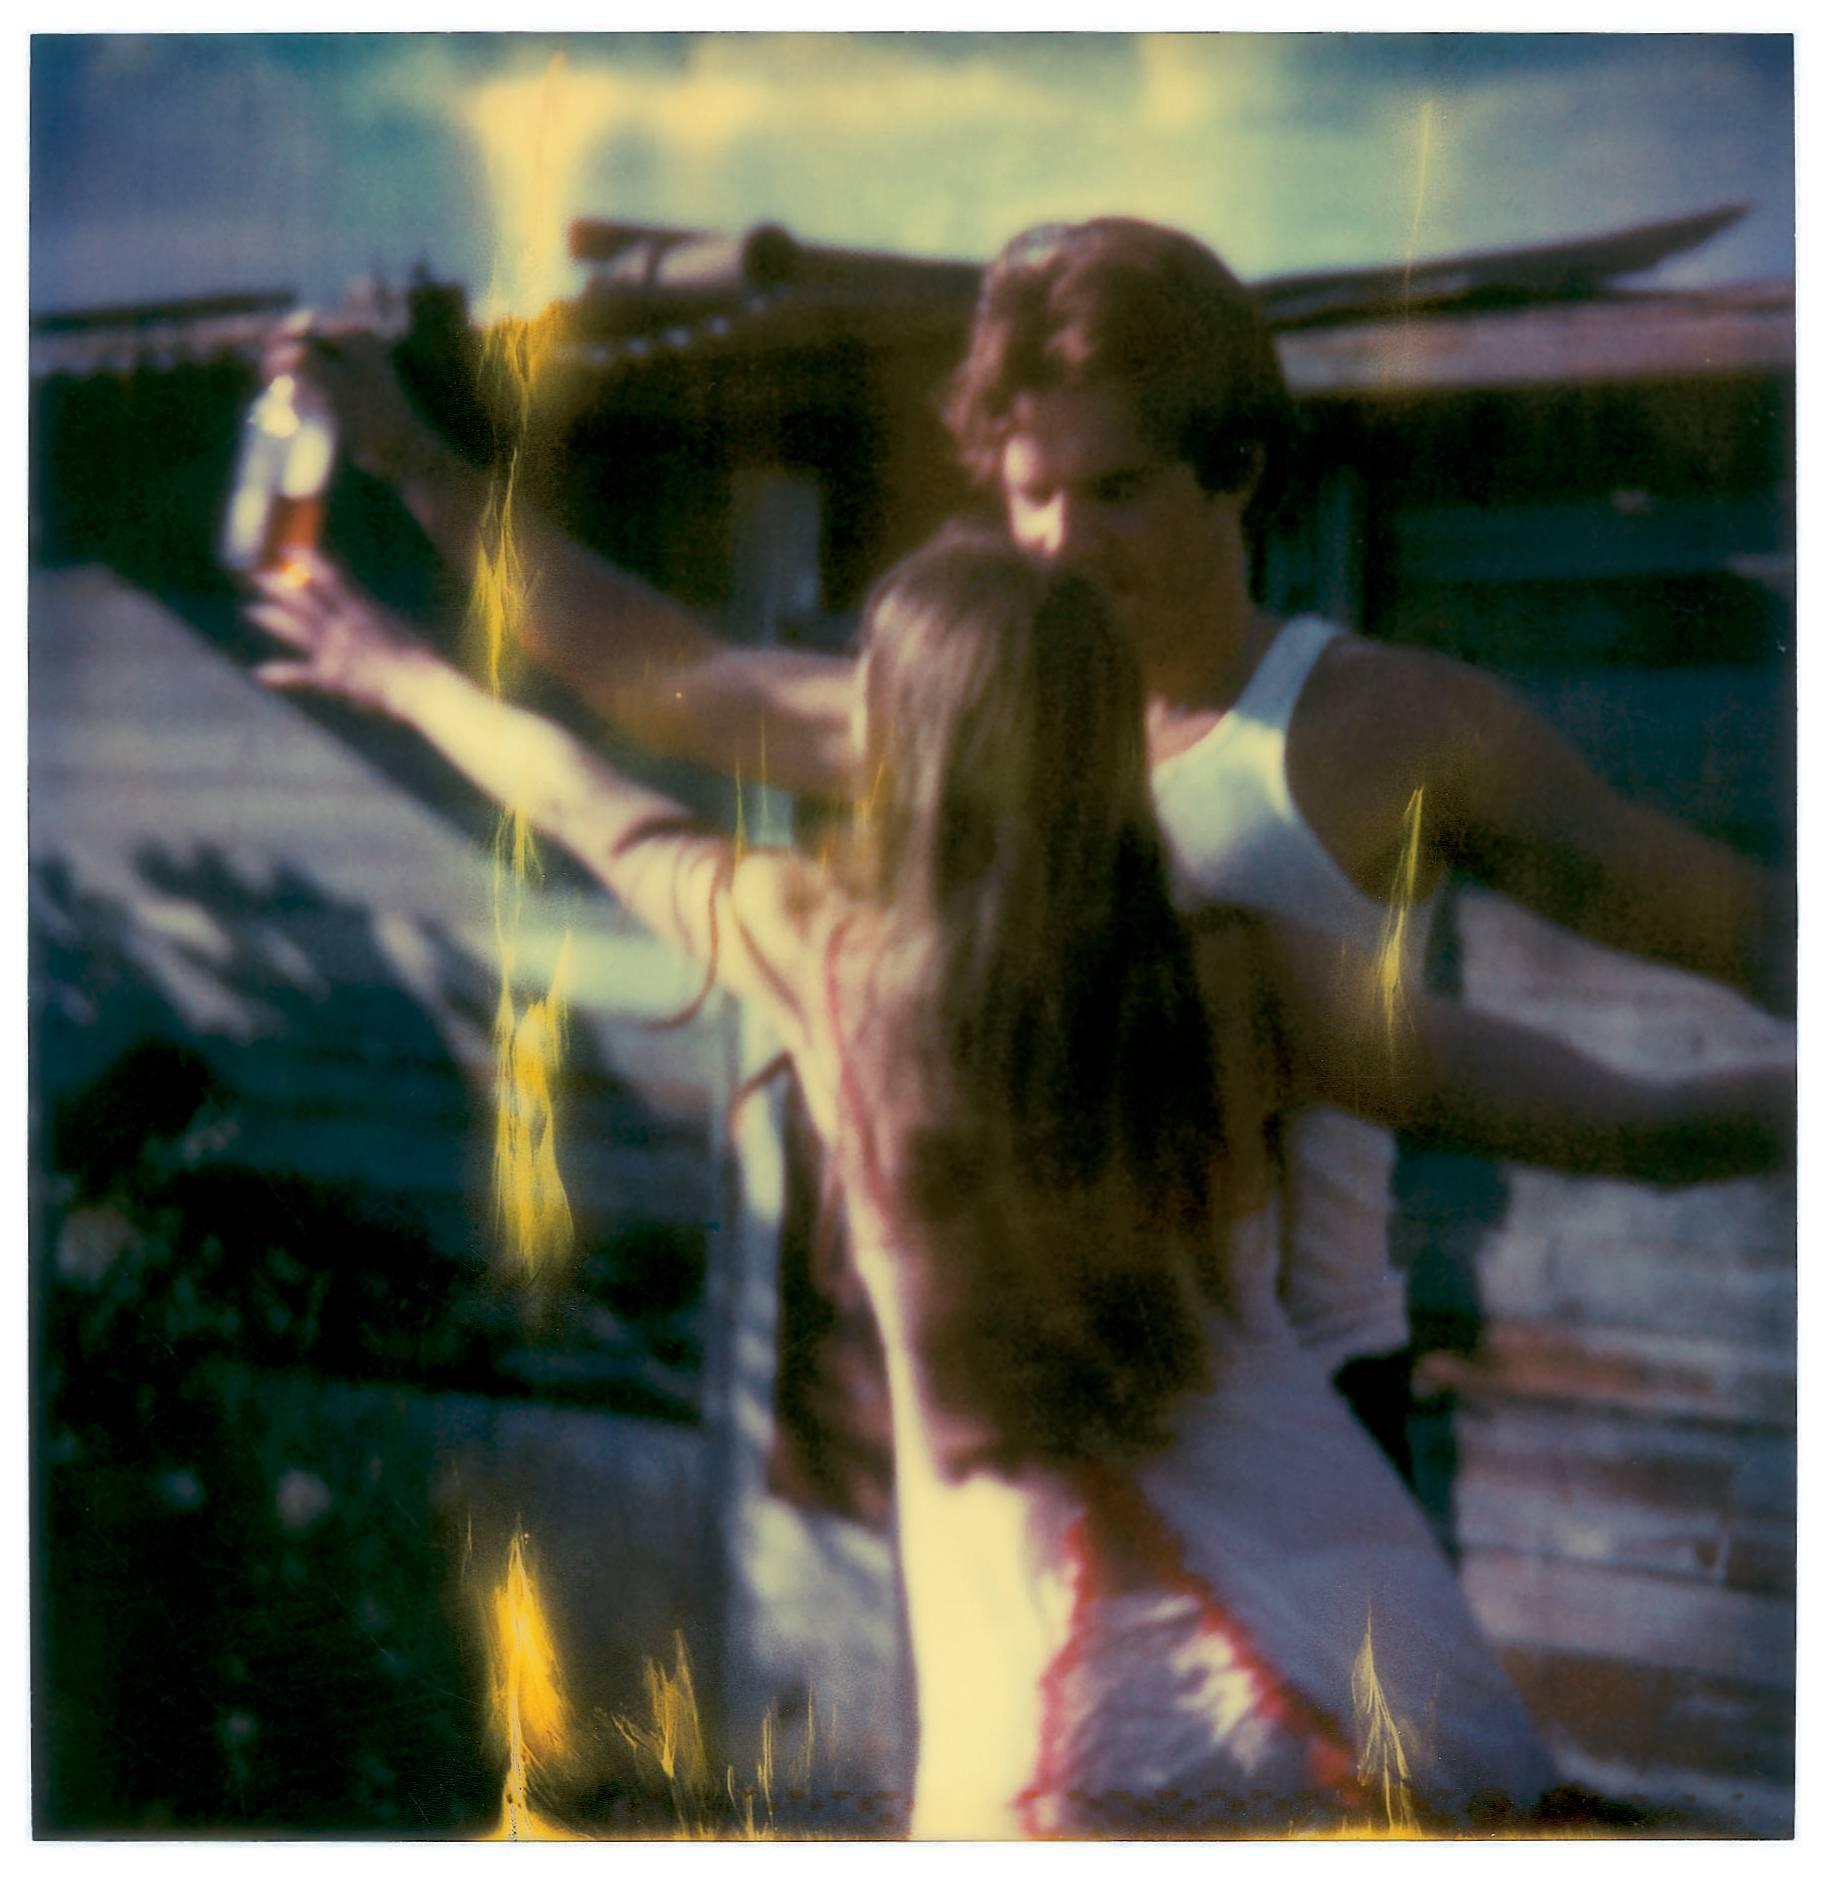 Whisky Dance I - Sidewinder - 8 pieces, analog, 82x80cm each - Black Color Photograph by Stefanie Schneider